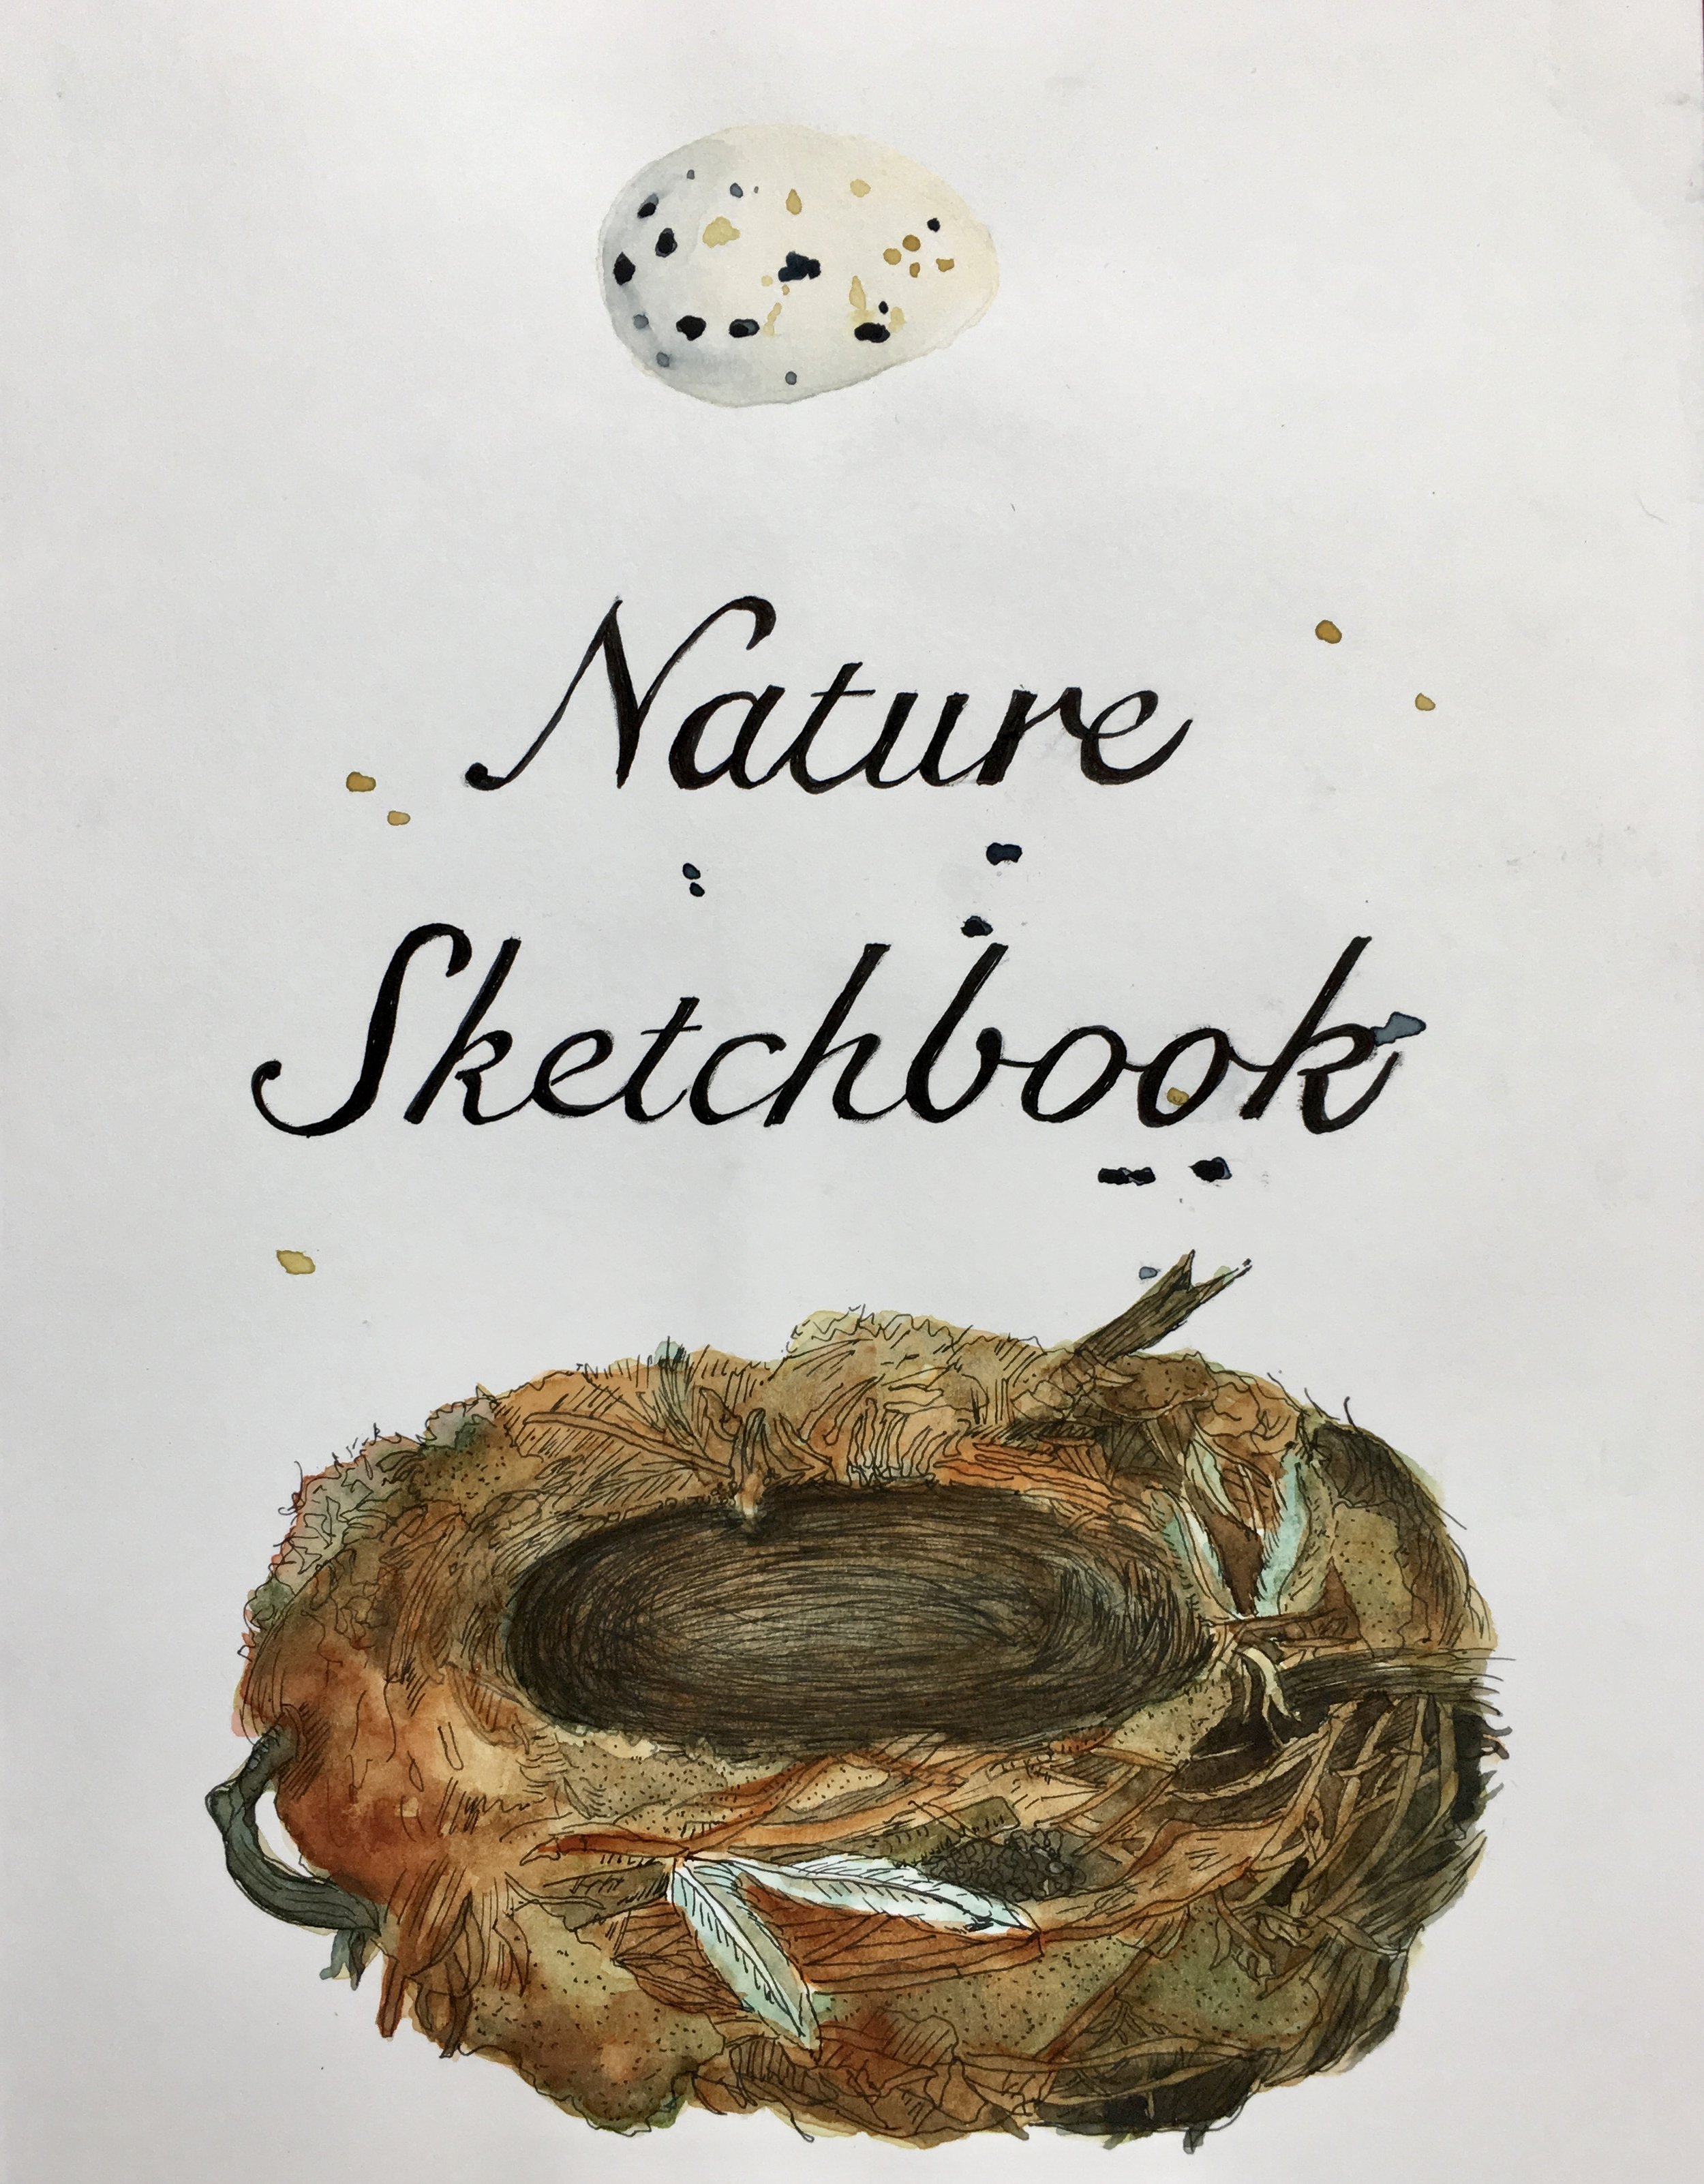 Sketchbook classes for kids & teens — Charlene Collins Freeman Art